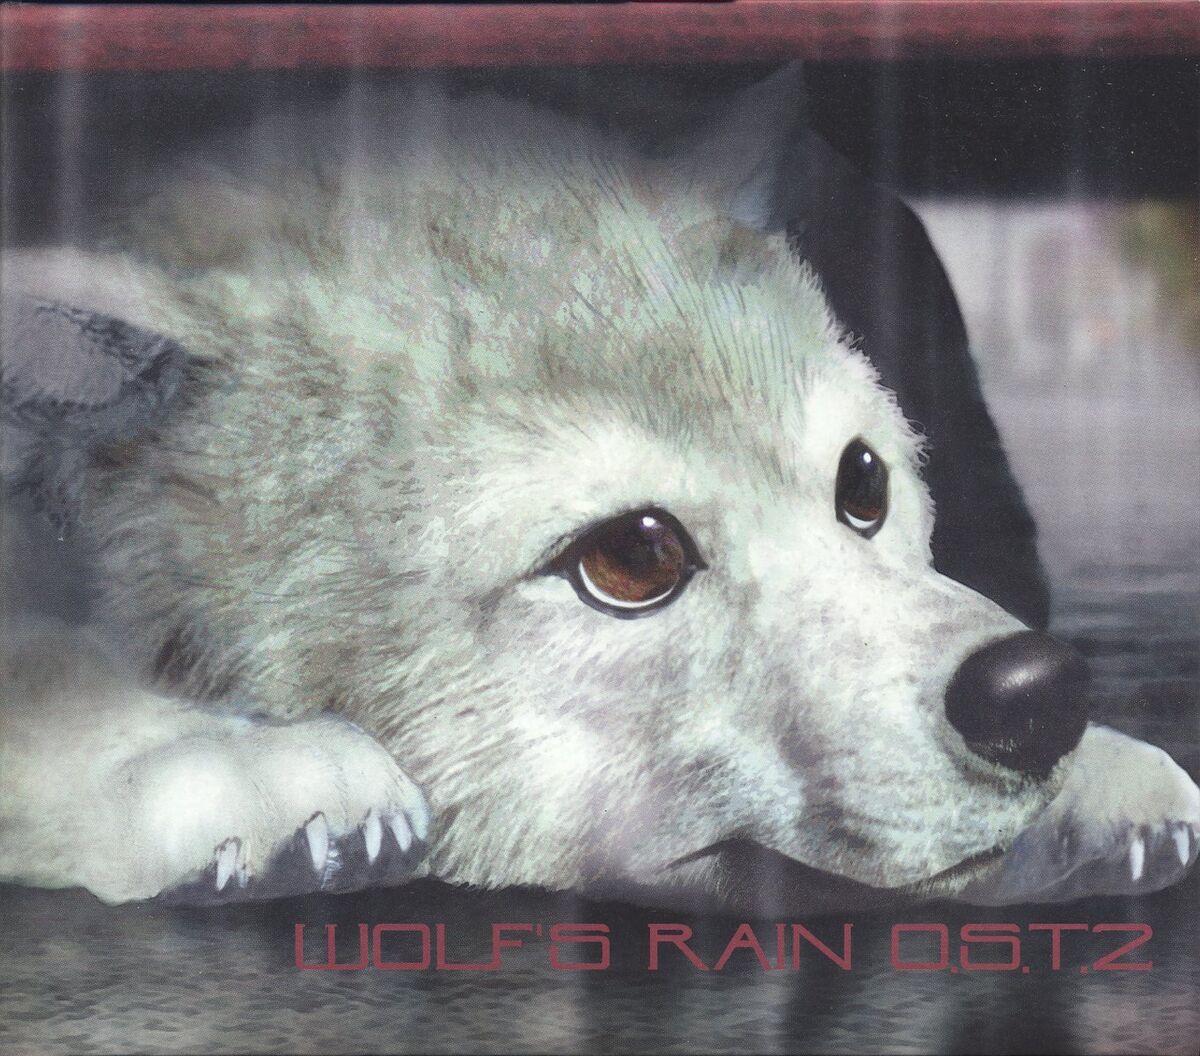 Wolf's Rain Original Soundtrack 2 | Wolf's Rain Wiki | Fandom